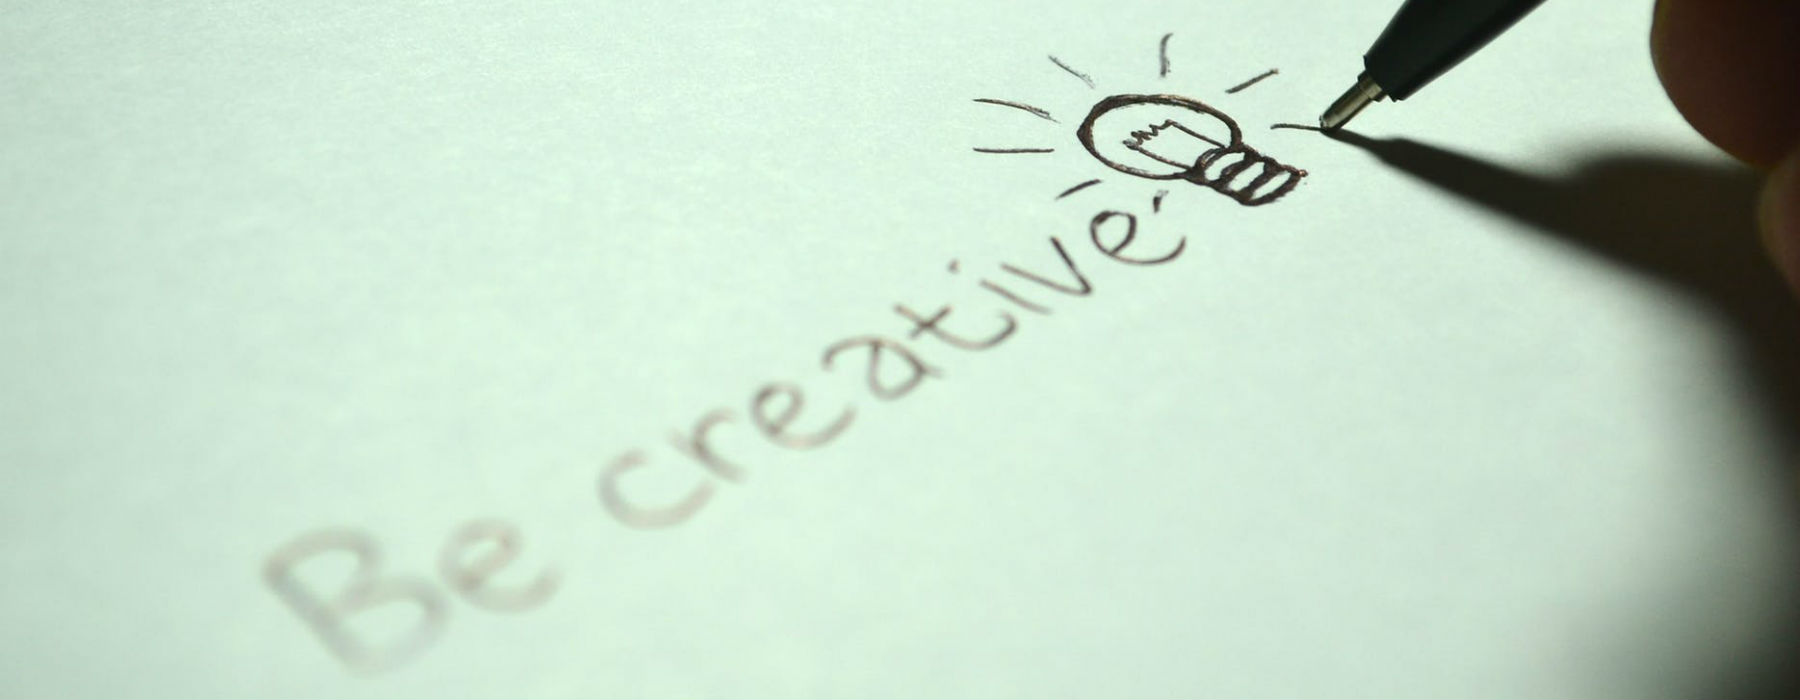 Penna che scrive "Be creative"